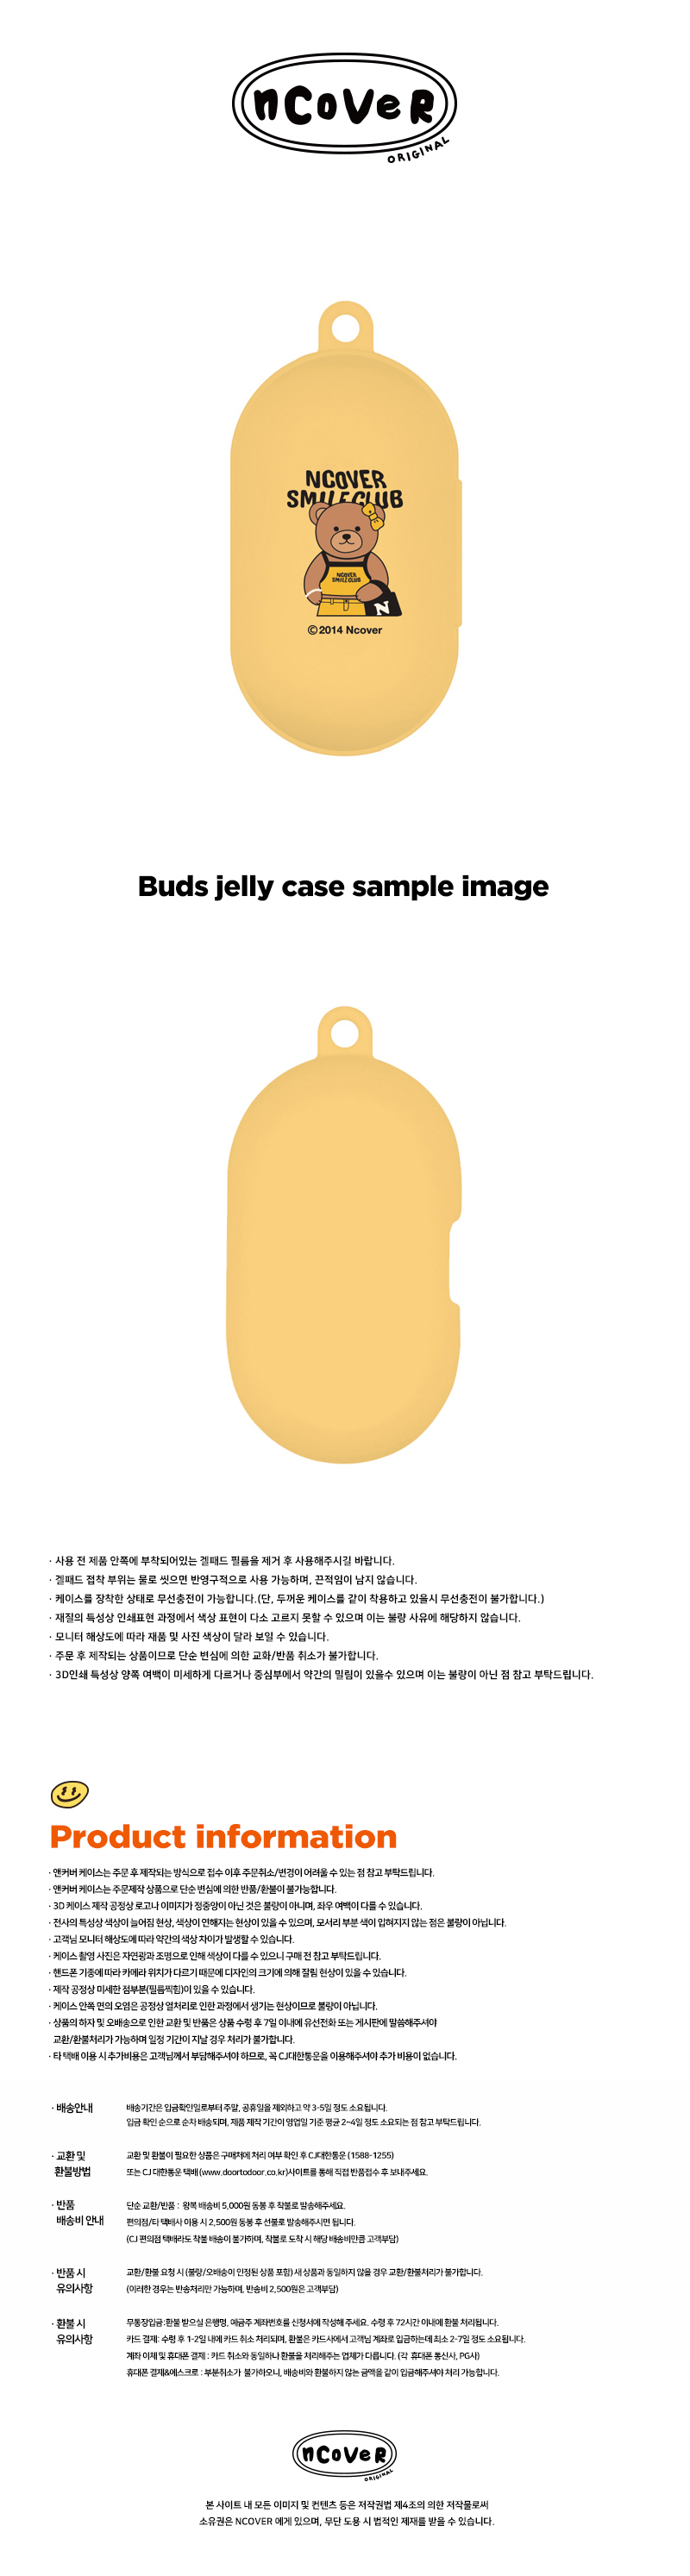  Handbag bruin-yellow(buds jelly)  15,000원 - 바이인터내셔널주식회사 디지털, 이어폰/헤드폰, 이어폰/헤드폰 액세서리, 에어팟/에어팟프로 케이스 바보사랑  Handbag bruin-yellow(buds jelly)  15,000원 - 바이인터내셔널주식회사 디지털, 이어폰/헤드폰, 이어폰/헤드폰 액세서리, 에어팟/에어팟프로 케이스 바보사랑